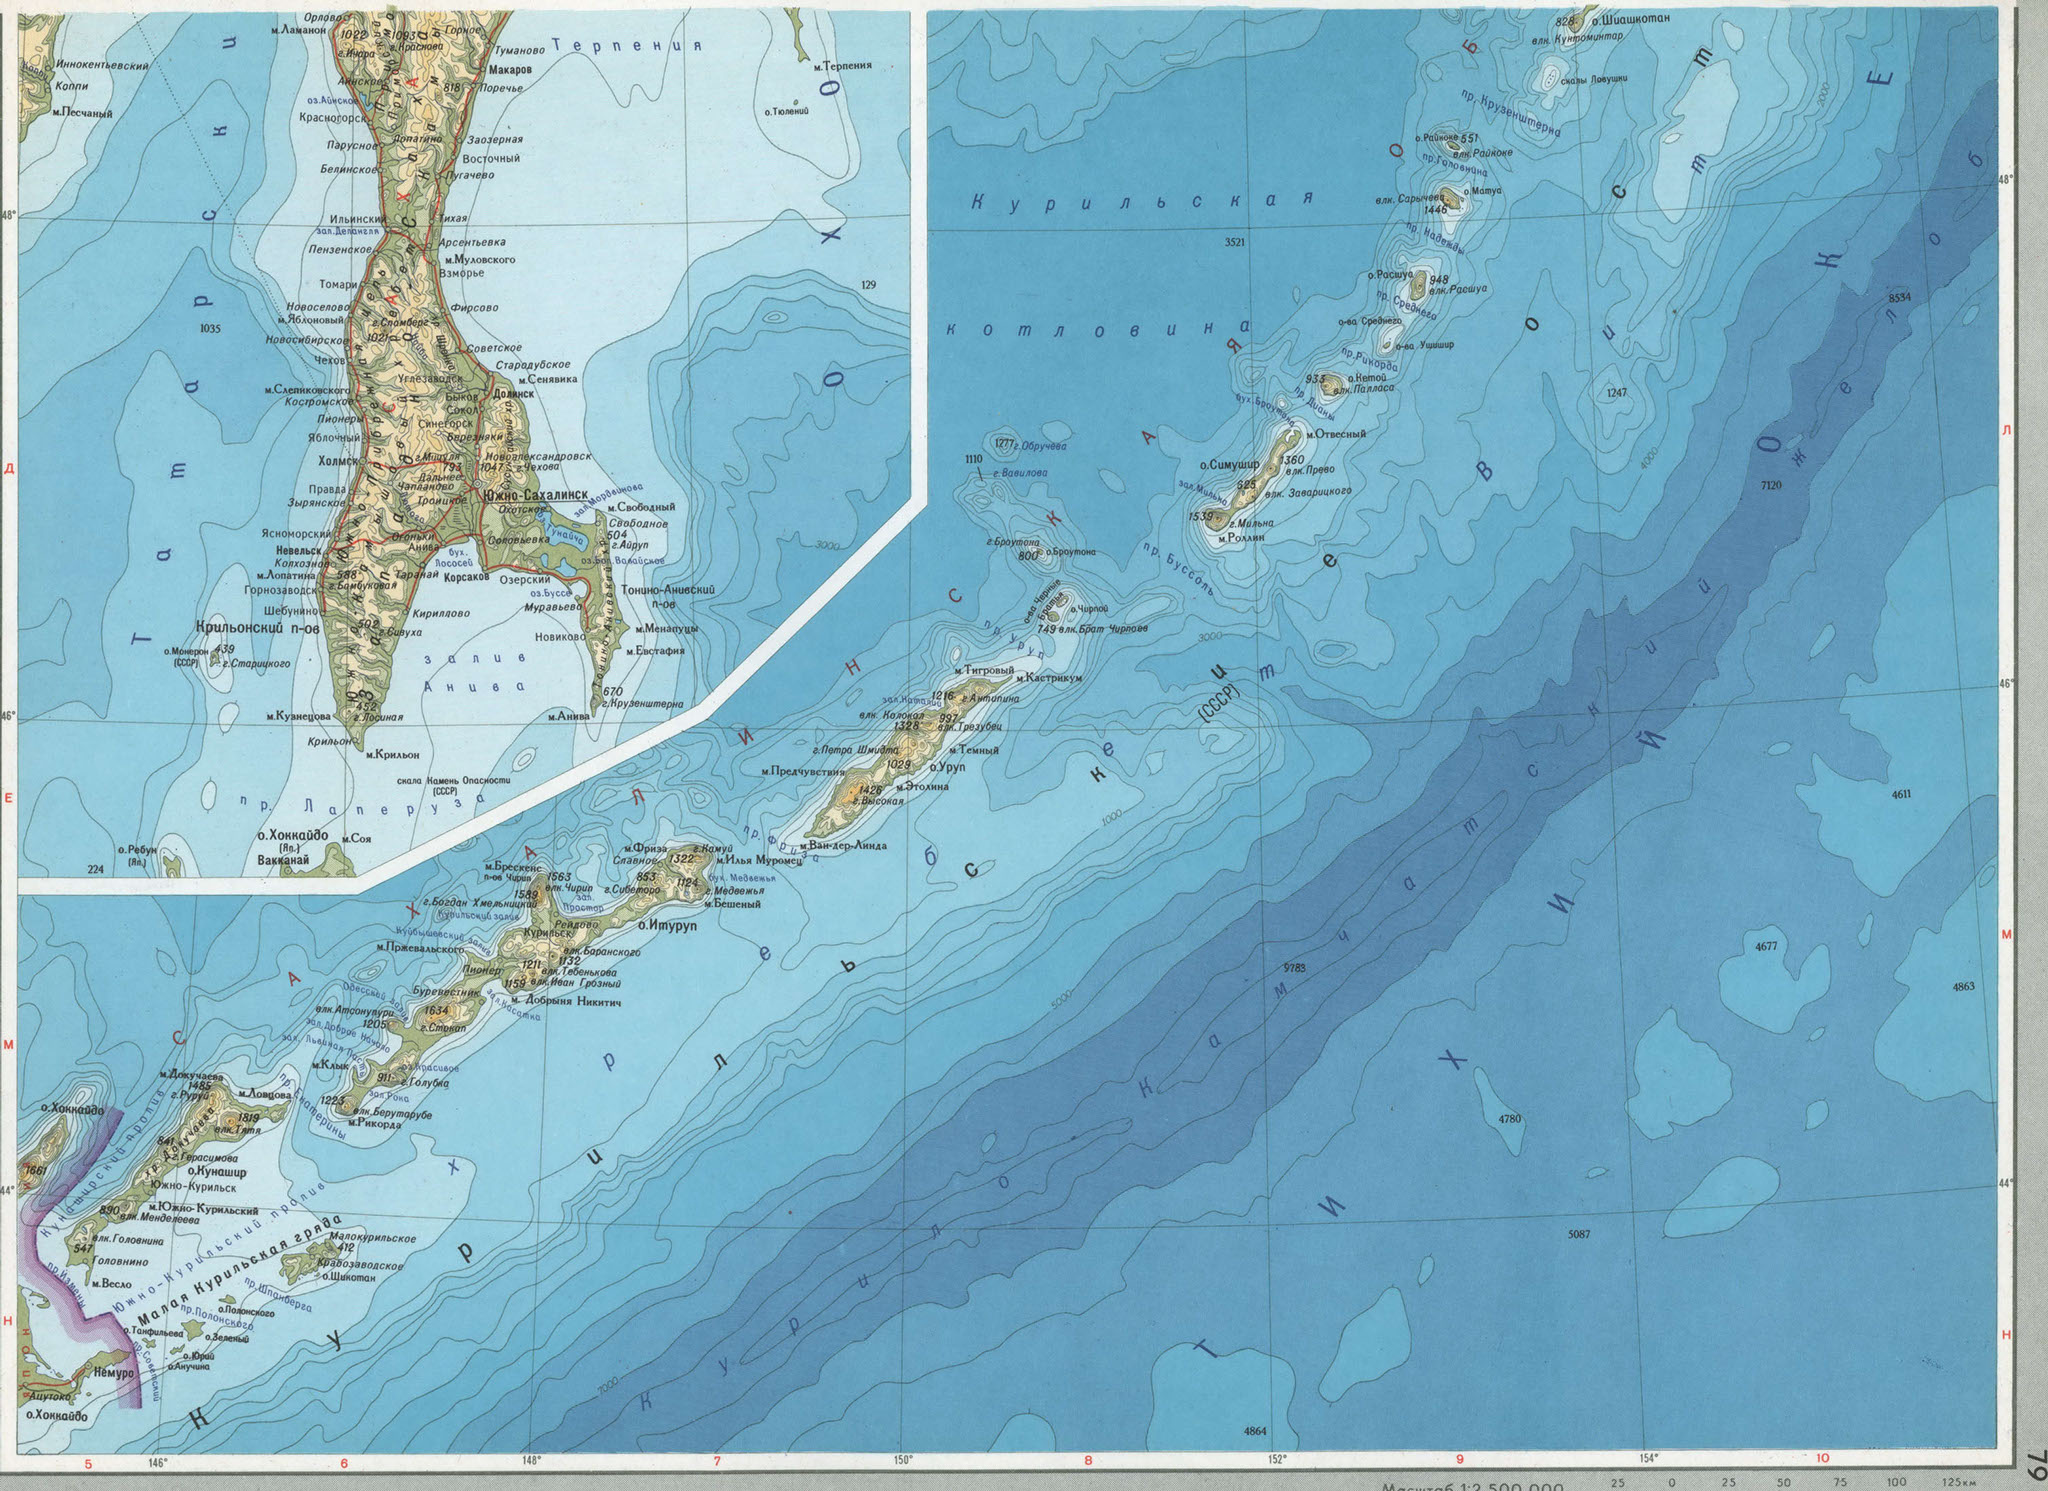 Японские острова на контурной карте